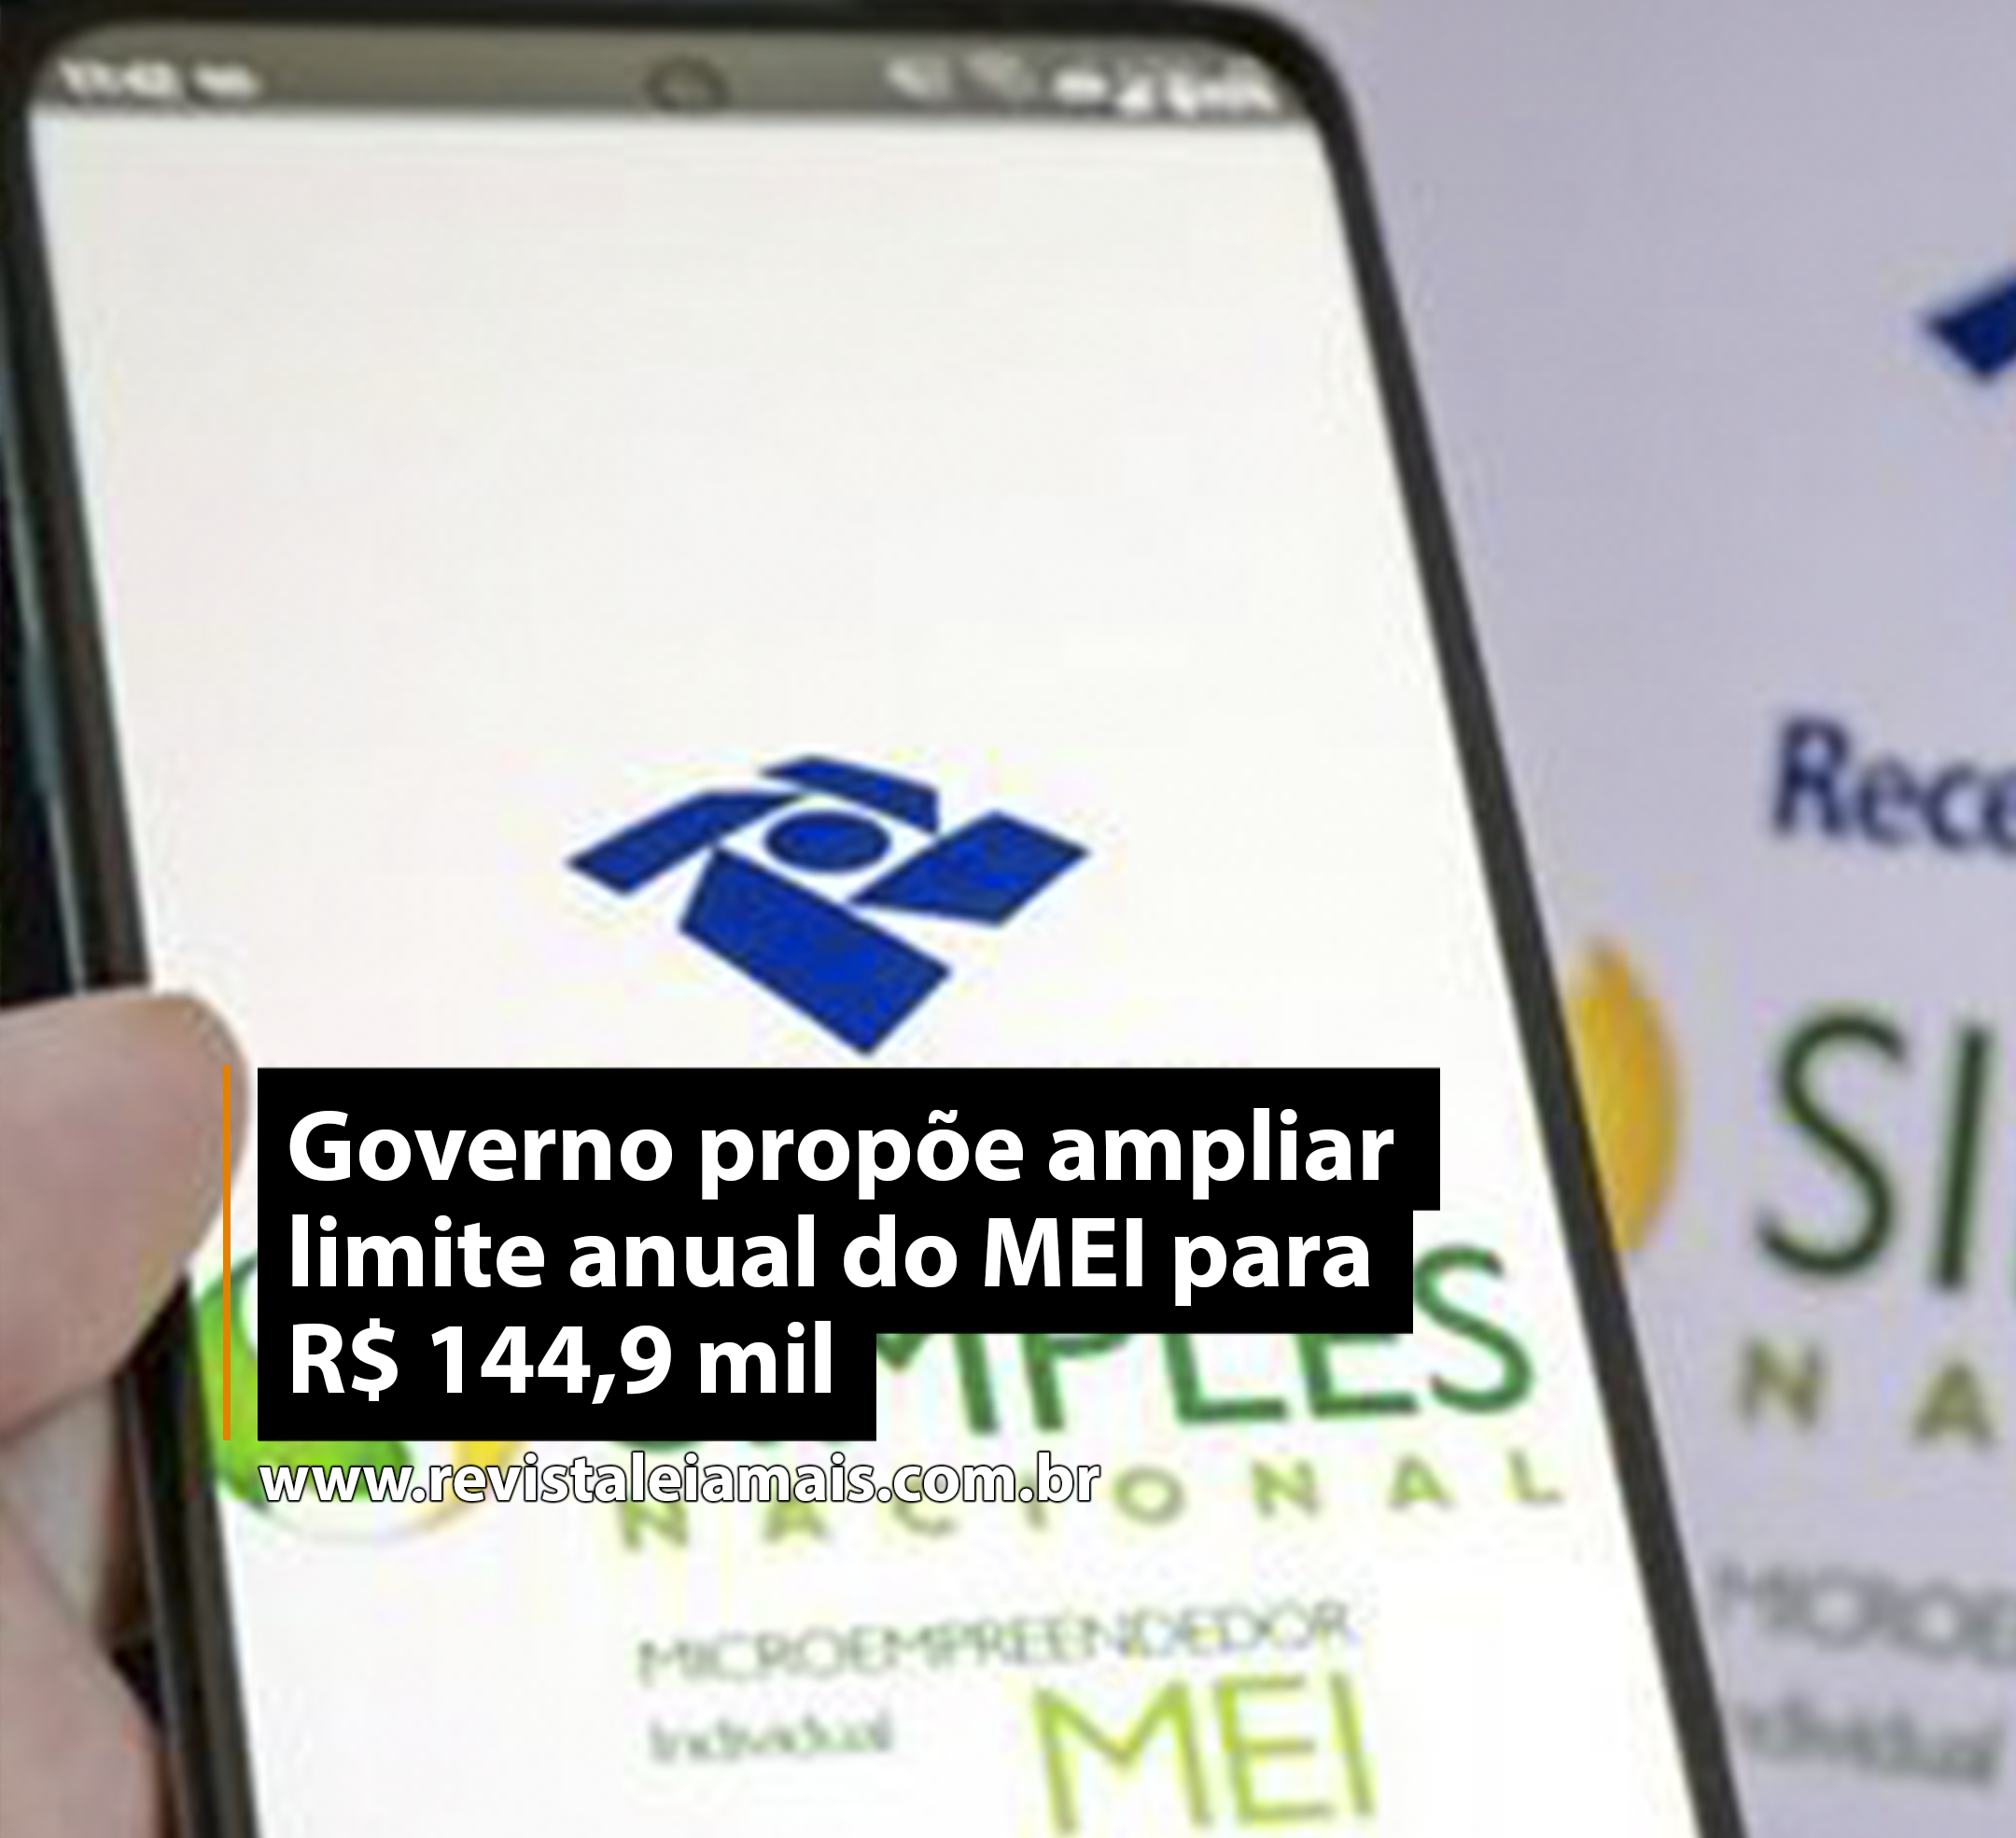 Governo propõe ampliar limite anual do MEI para R$ 144,9 mil